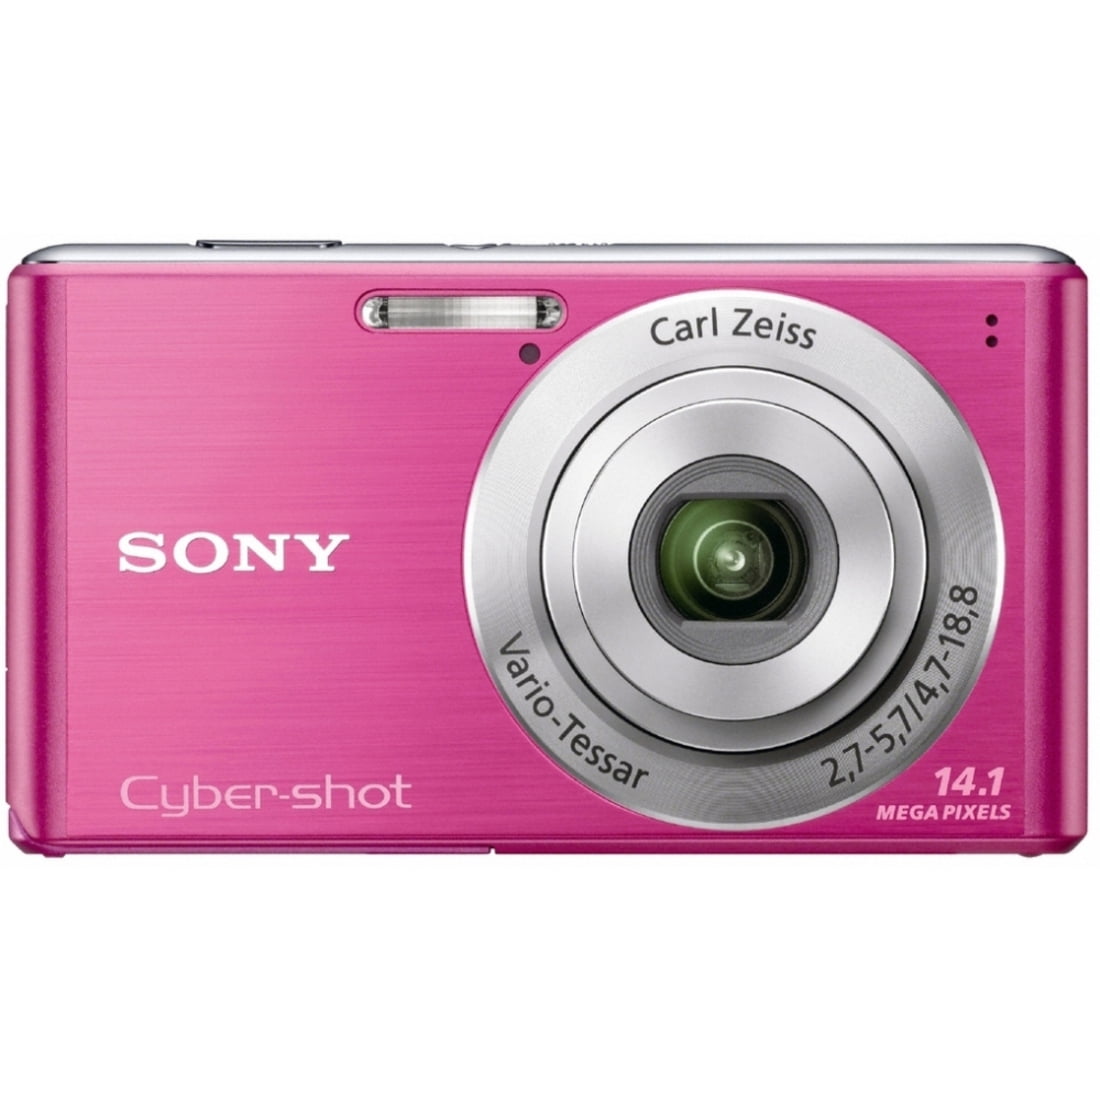 Sony - Cámara digital Cyber Shot 16.1 MP serie W Rosada DSC-W730/P comprar  en tu tienda online Buscalibre Chile